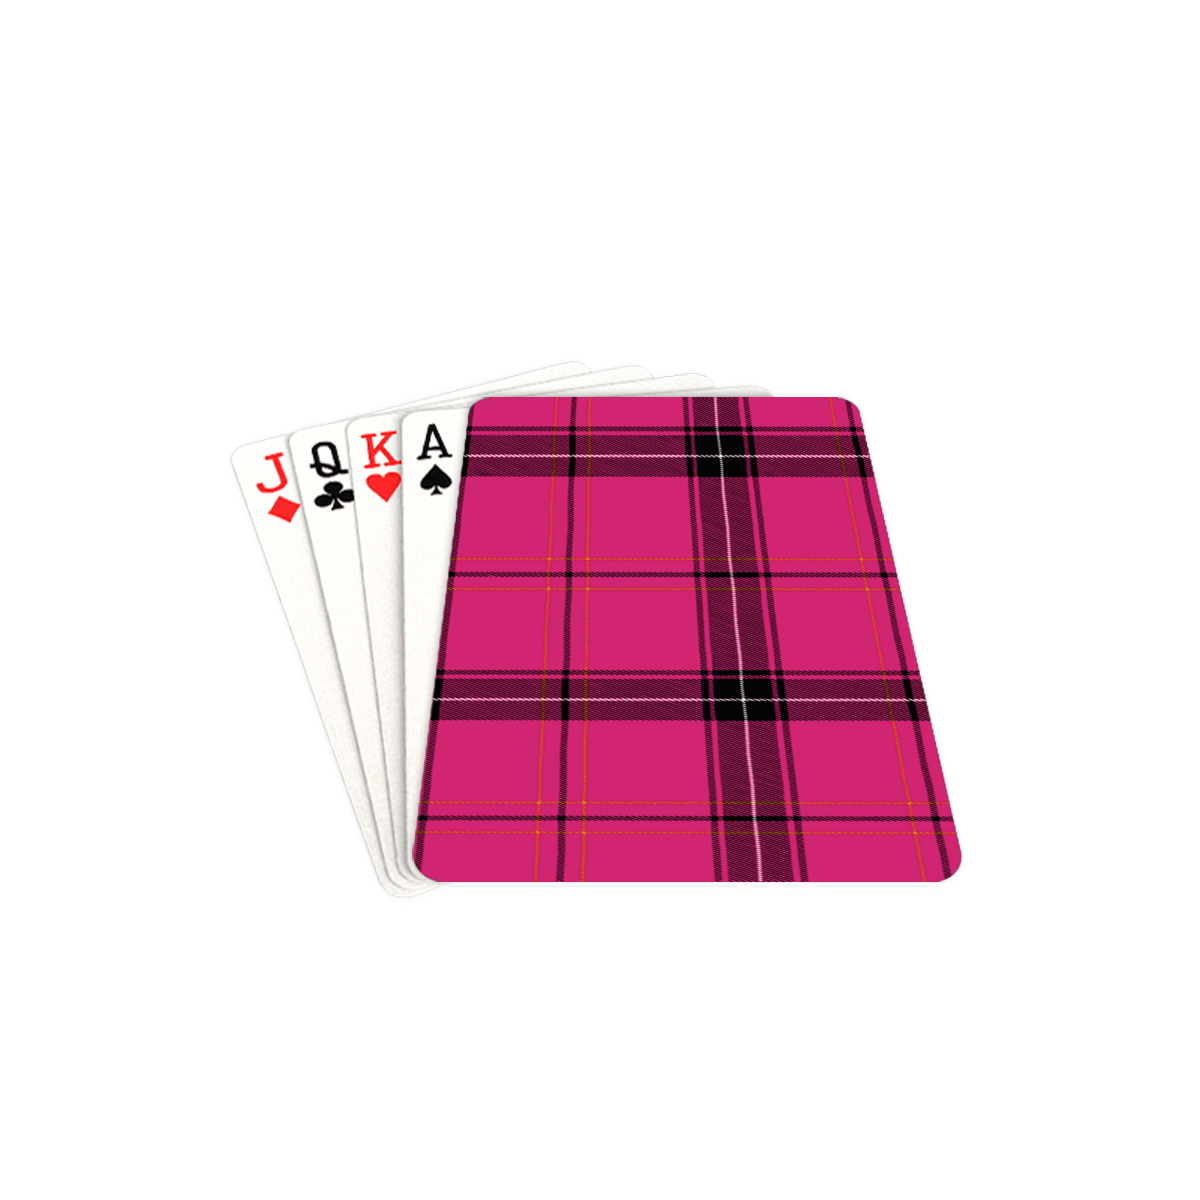 dark pink plaid Playing Cards 2.5"x3.5"